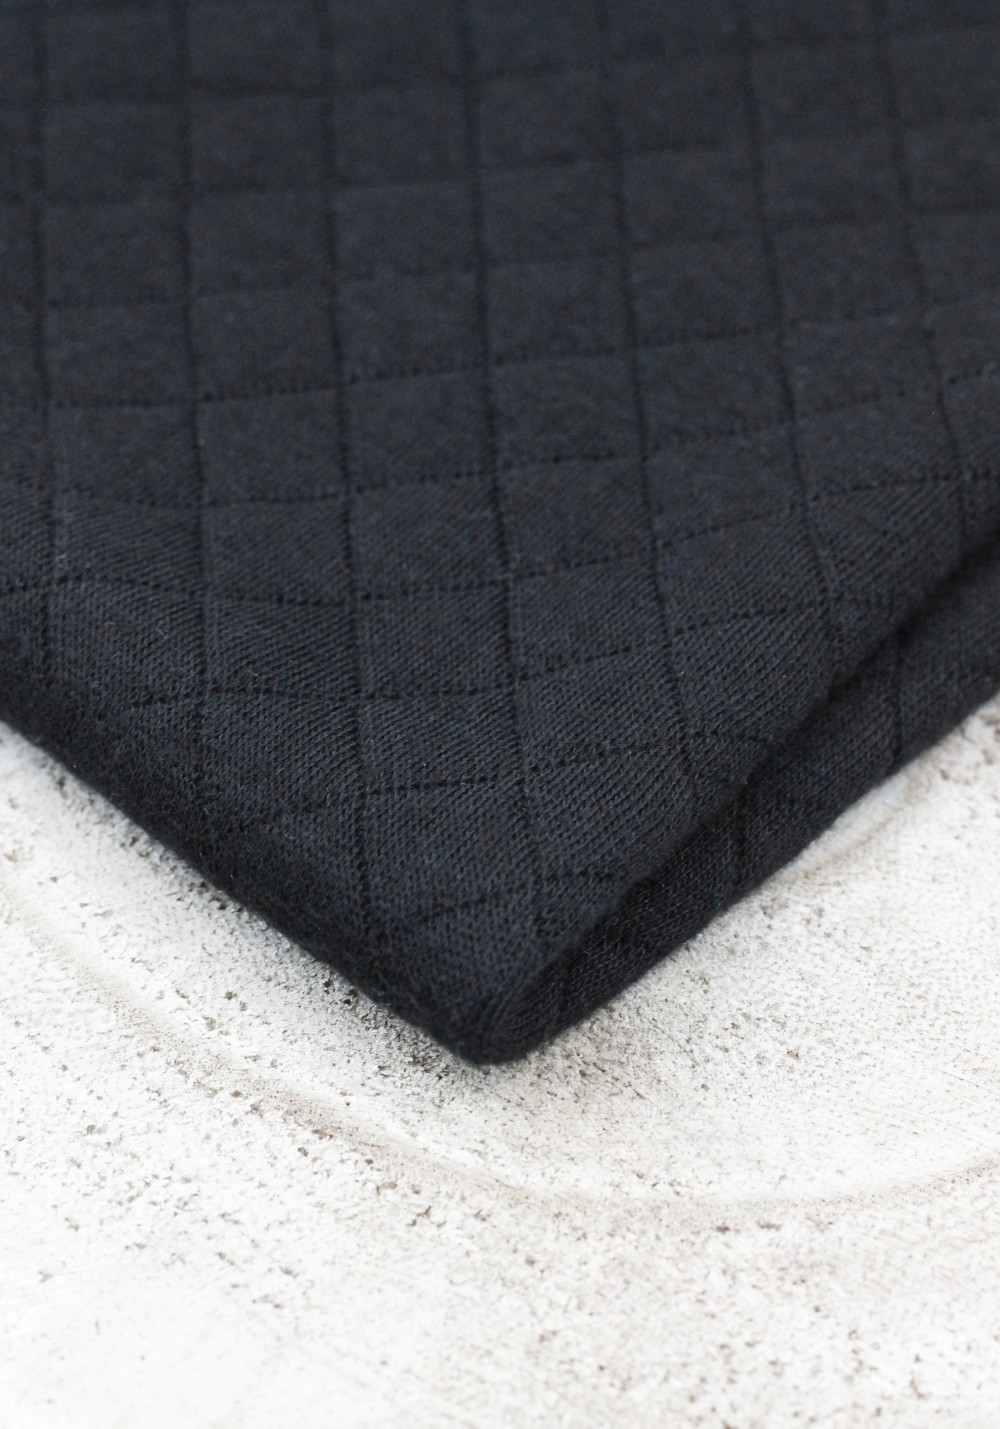 Coupon 130x140cm - Jersey matelassé noir